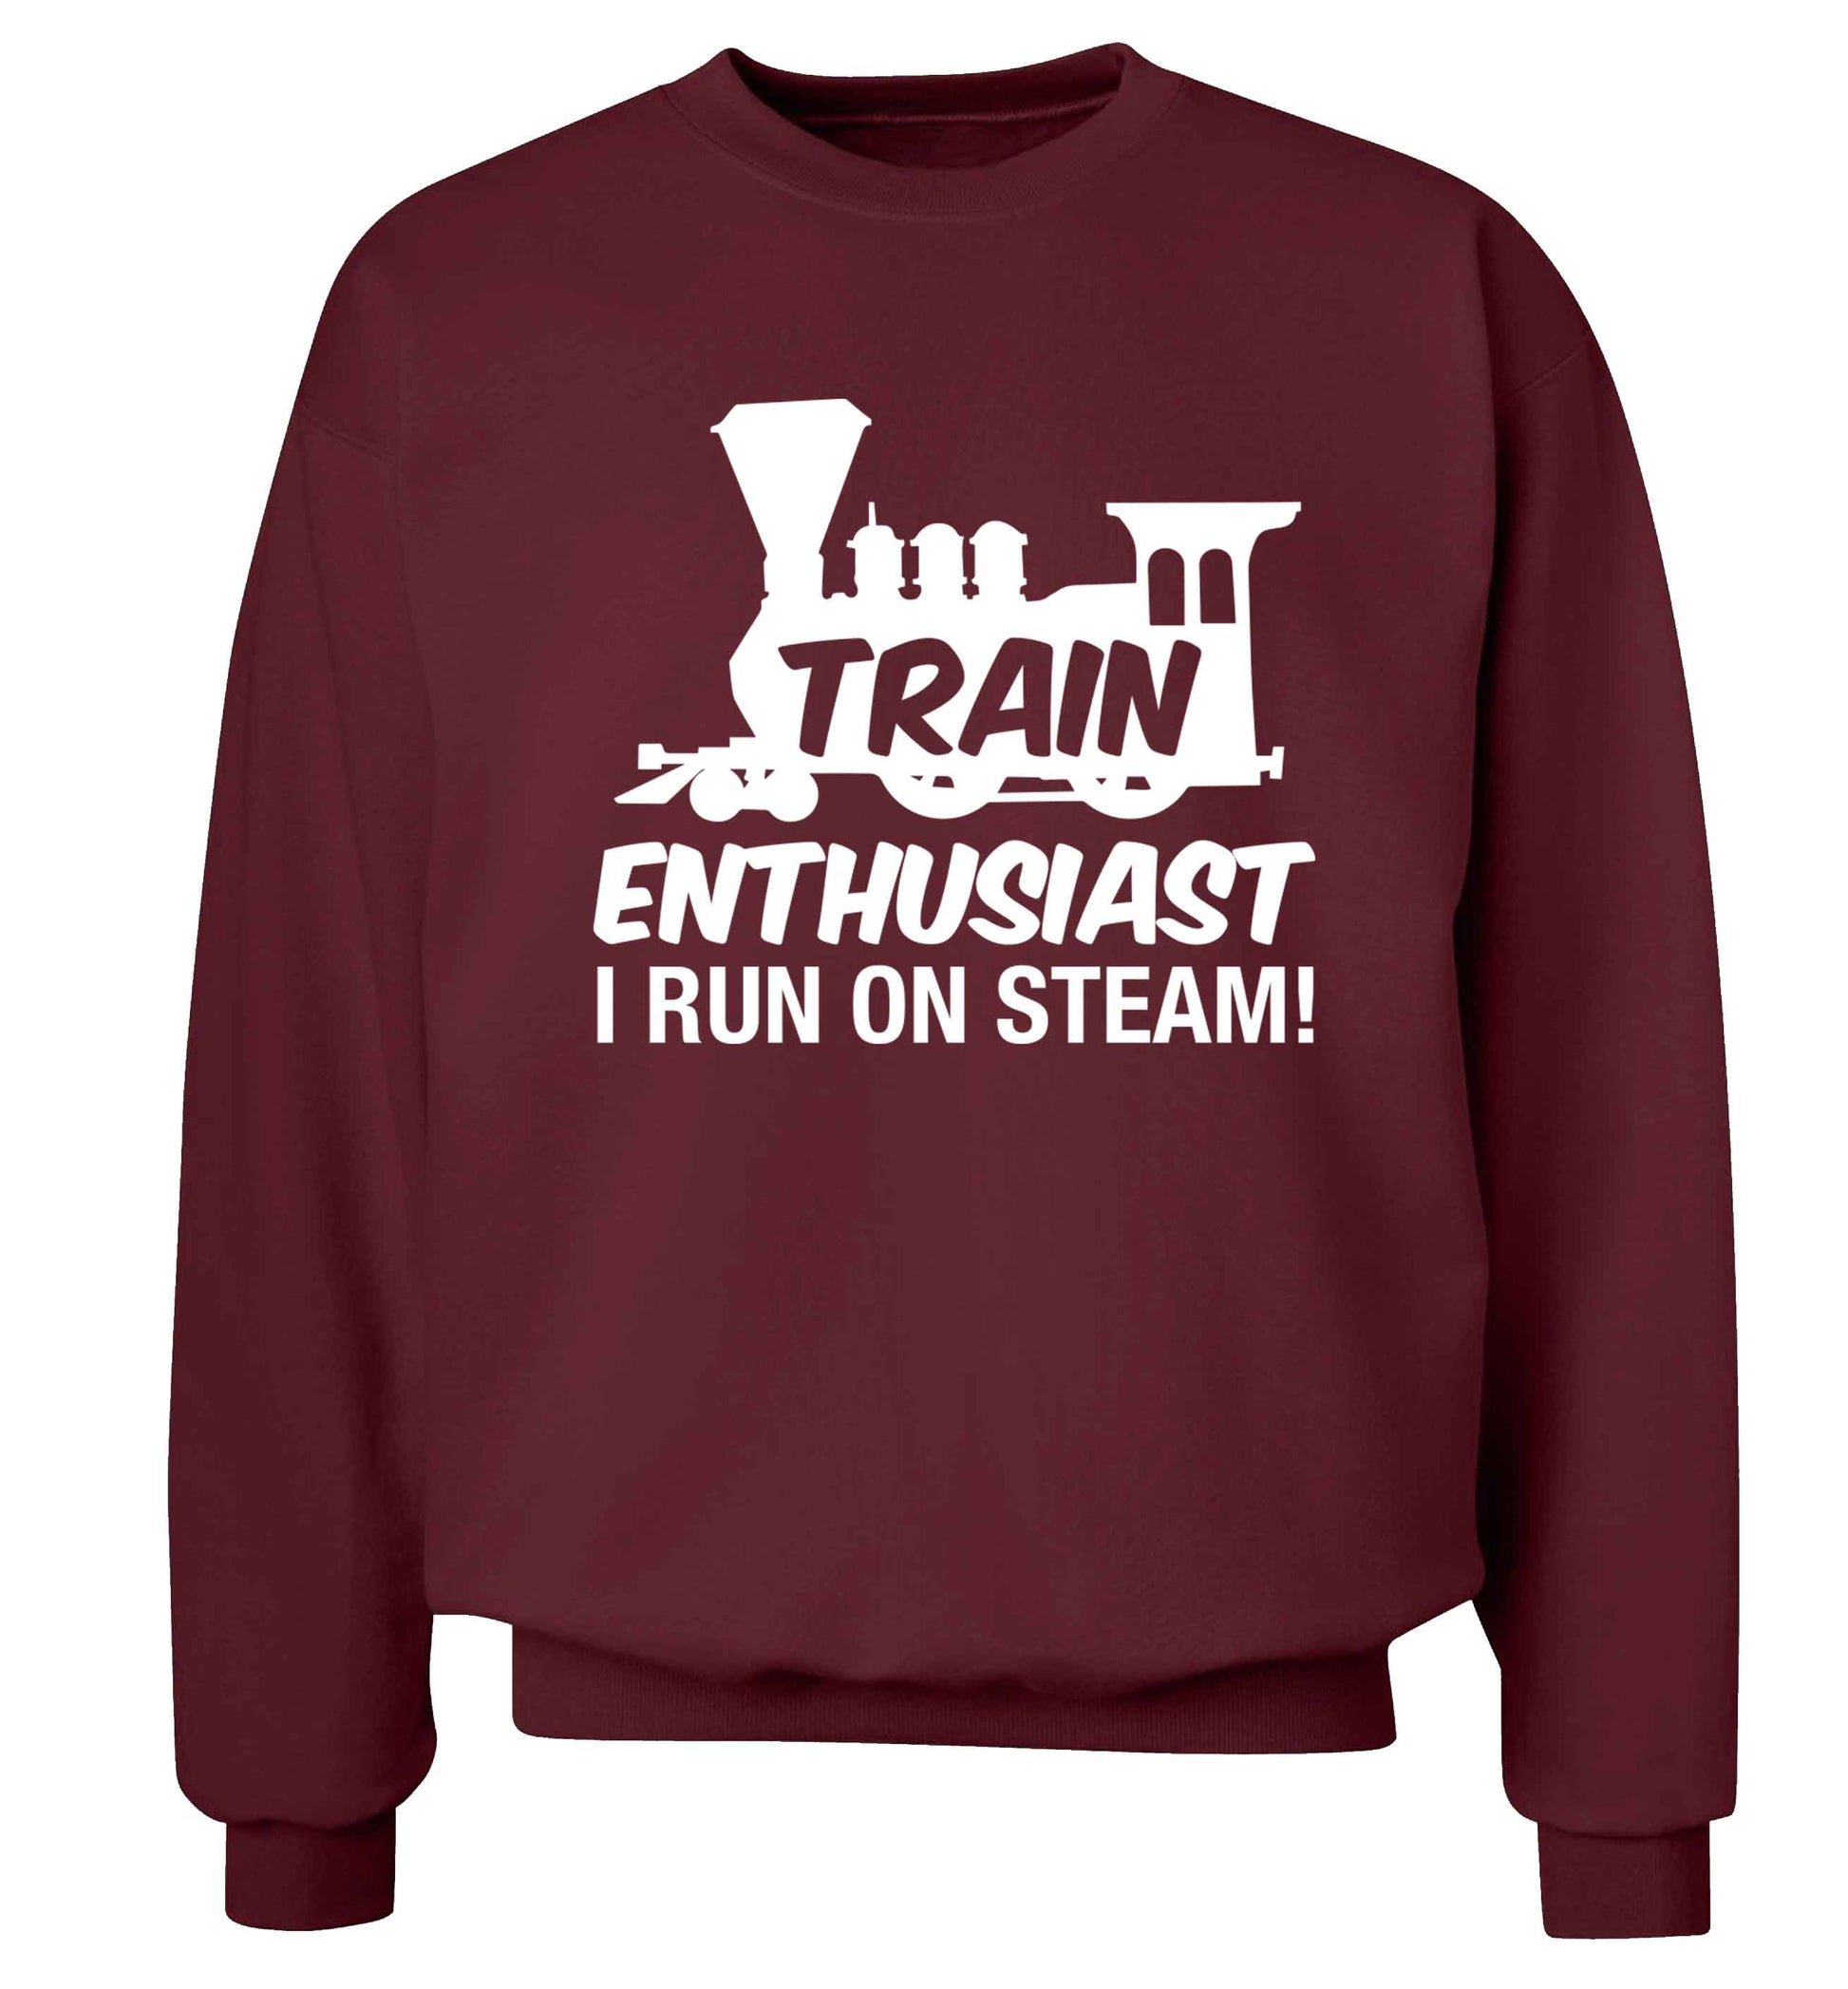 Train enthusiast I run on steam Adult's unisex maroon Sweater 2XL